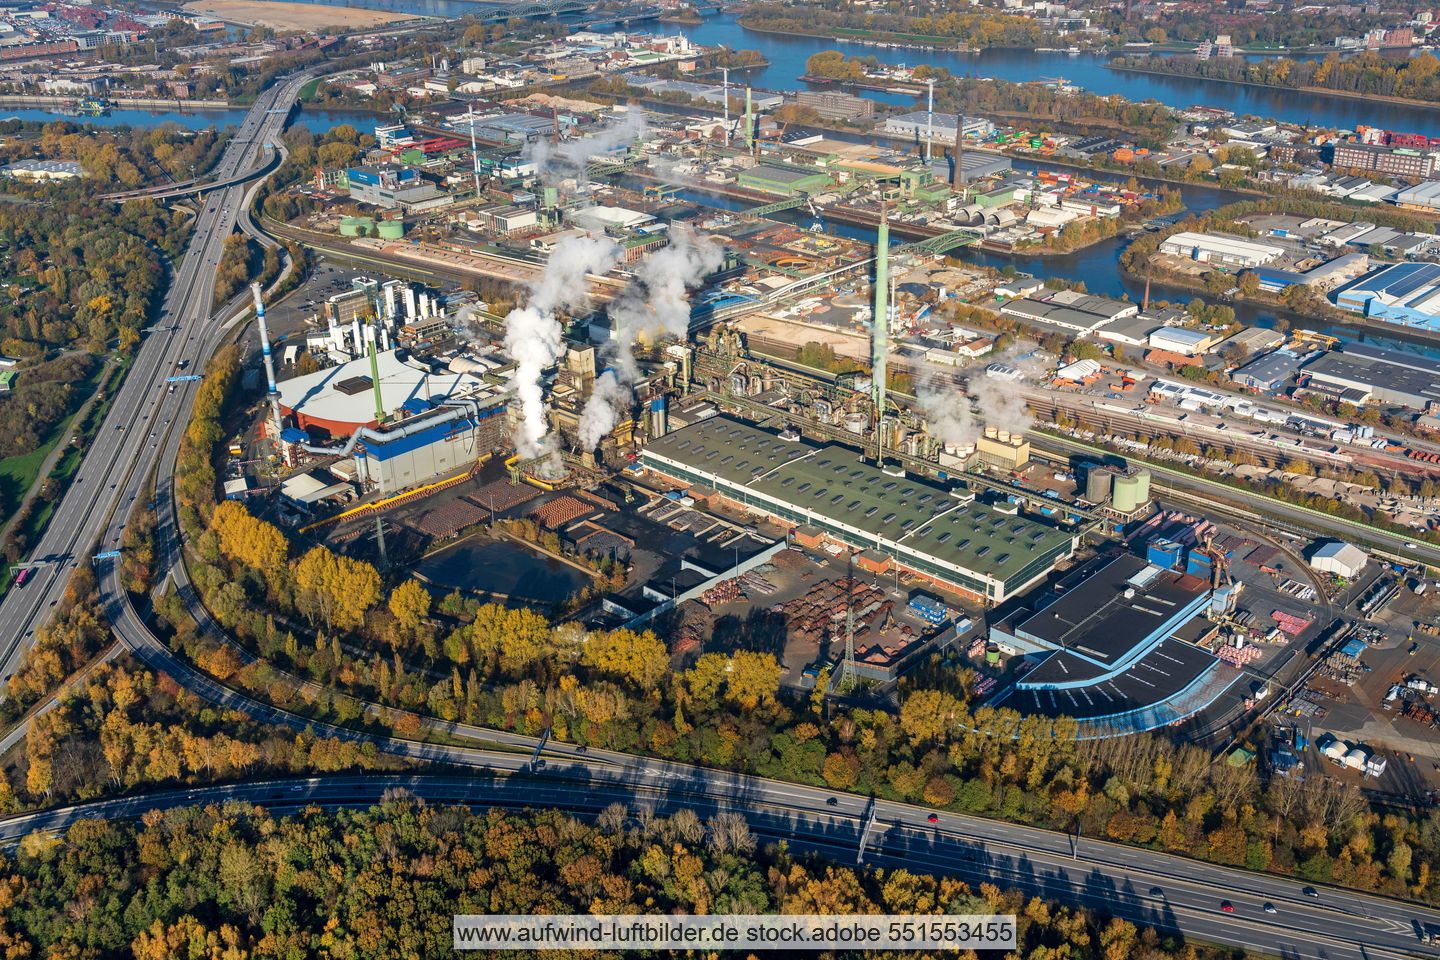 Aerial view of Aurubis plant in Hamburg